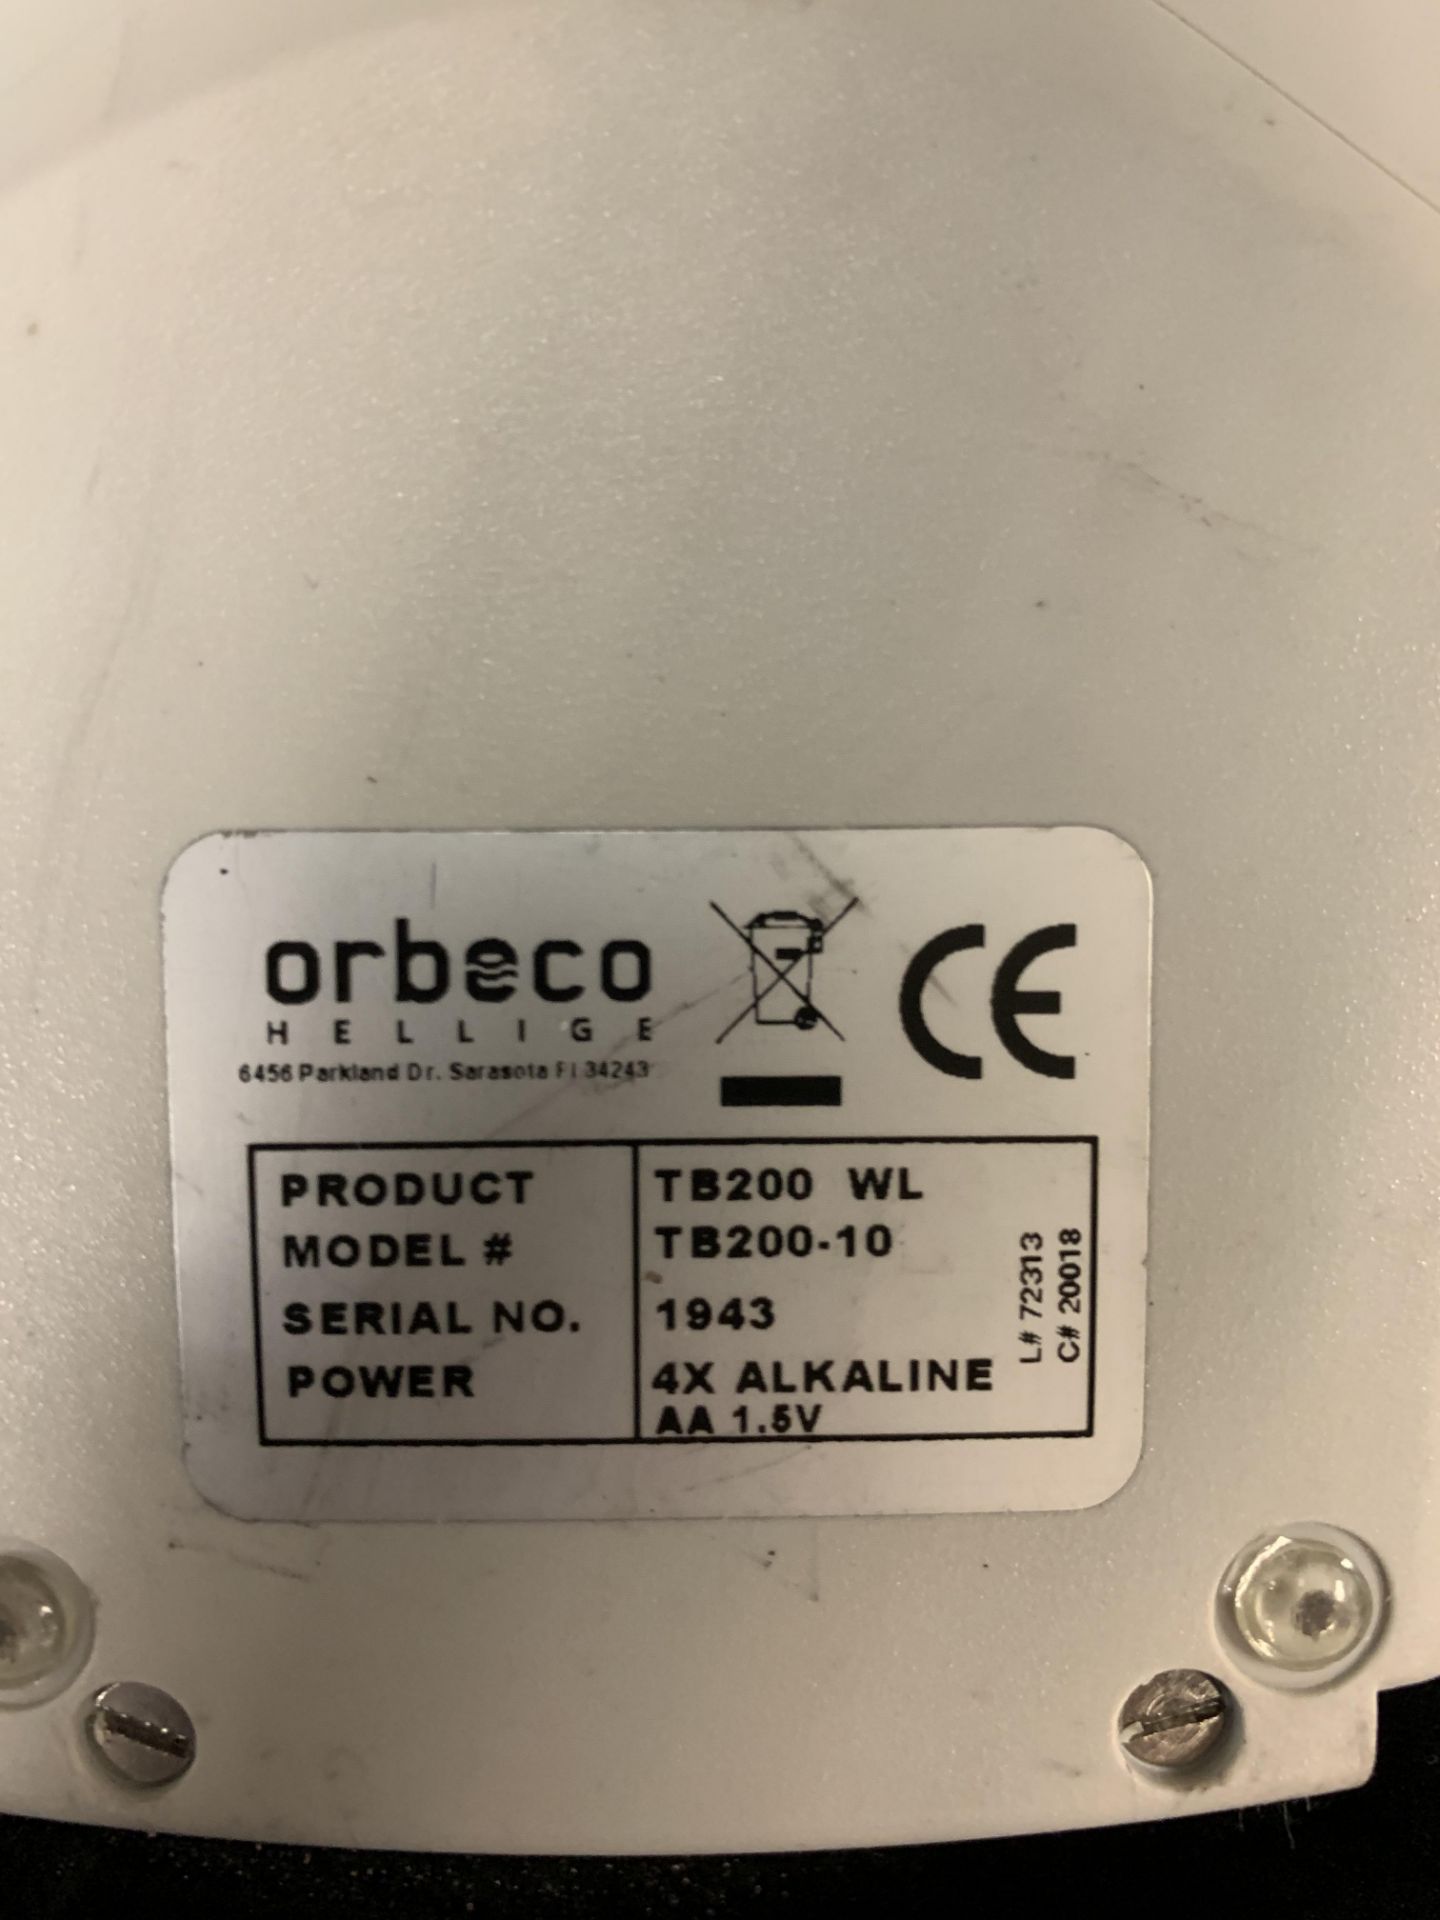 Orbeco-Hellige Tubidimeter - Image 3 of 3